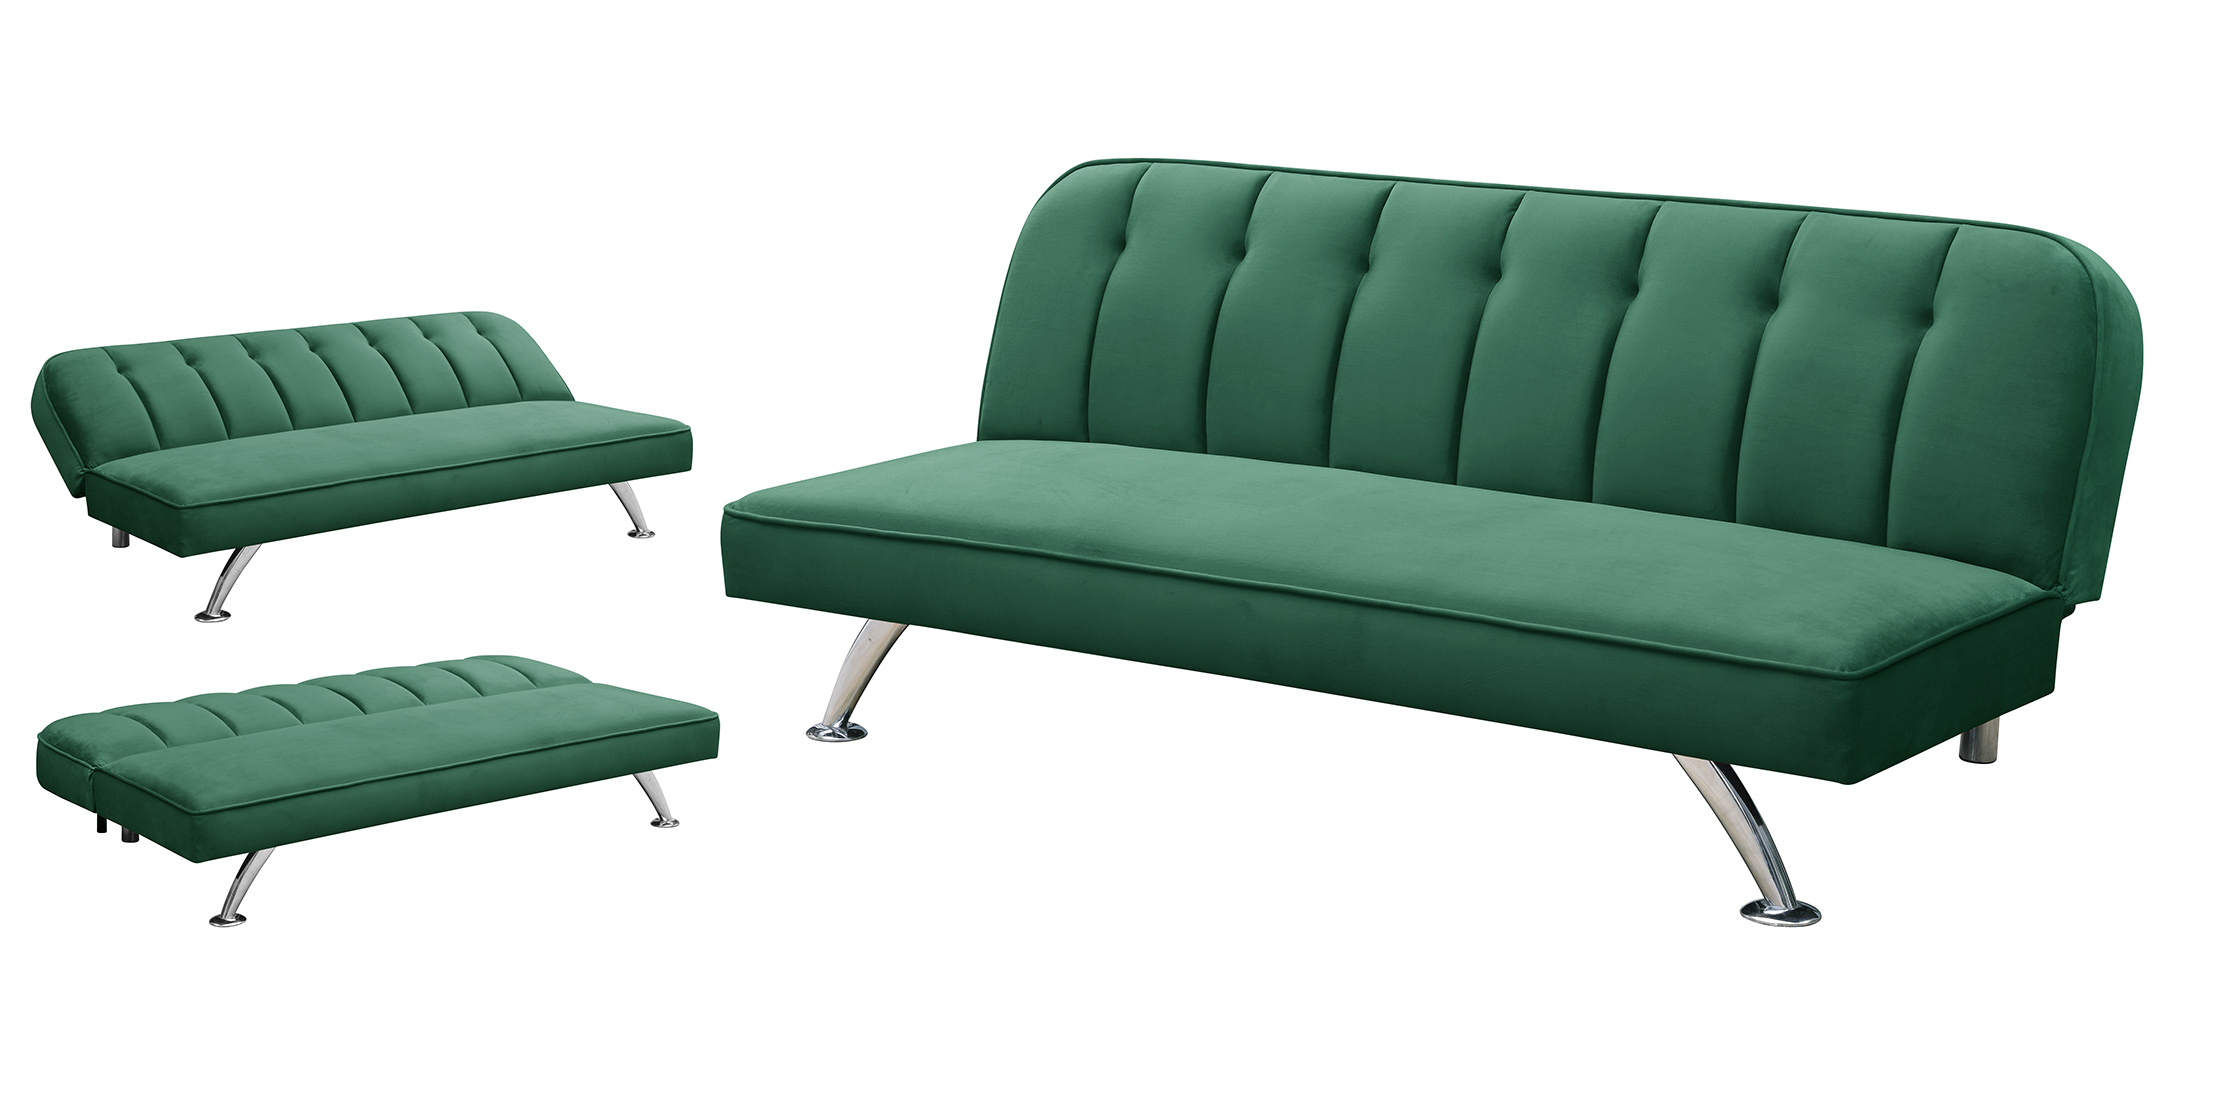 graham and green sofa bed